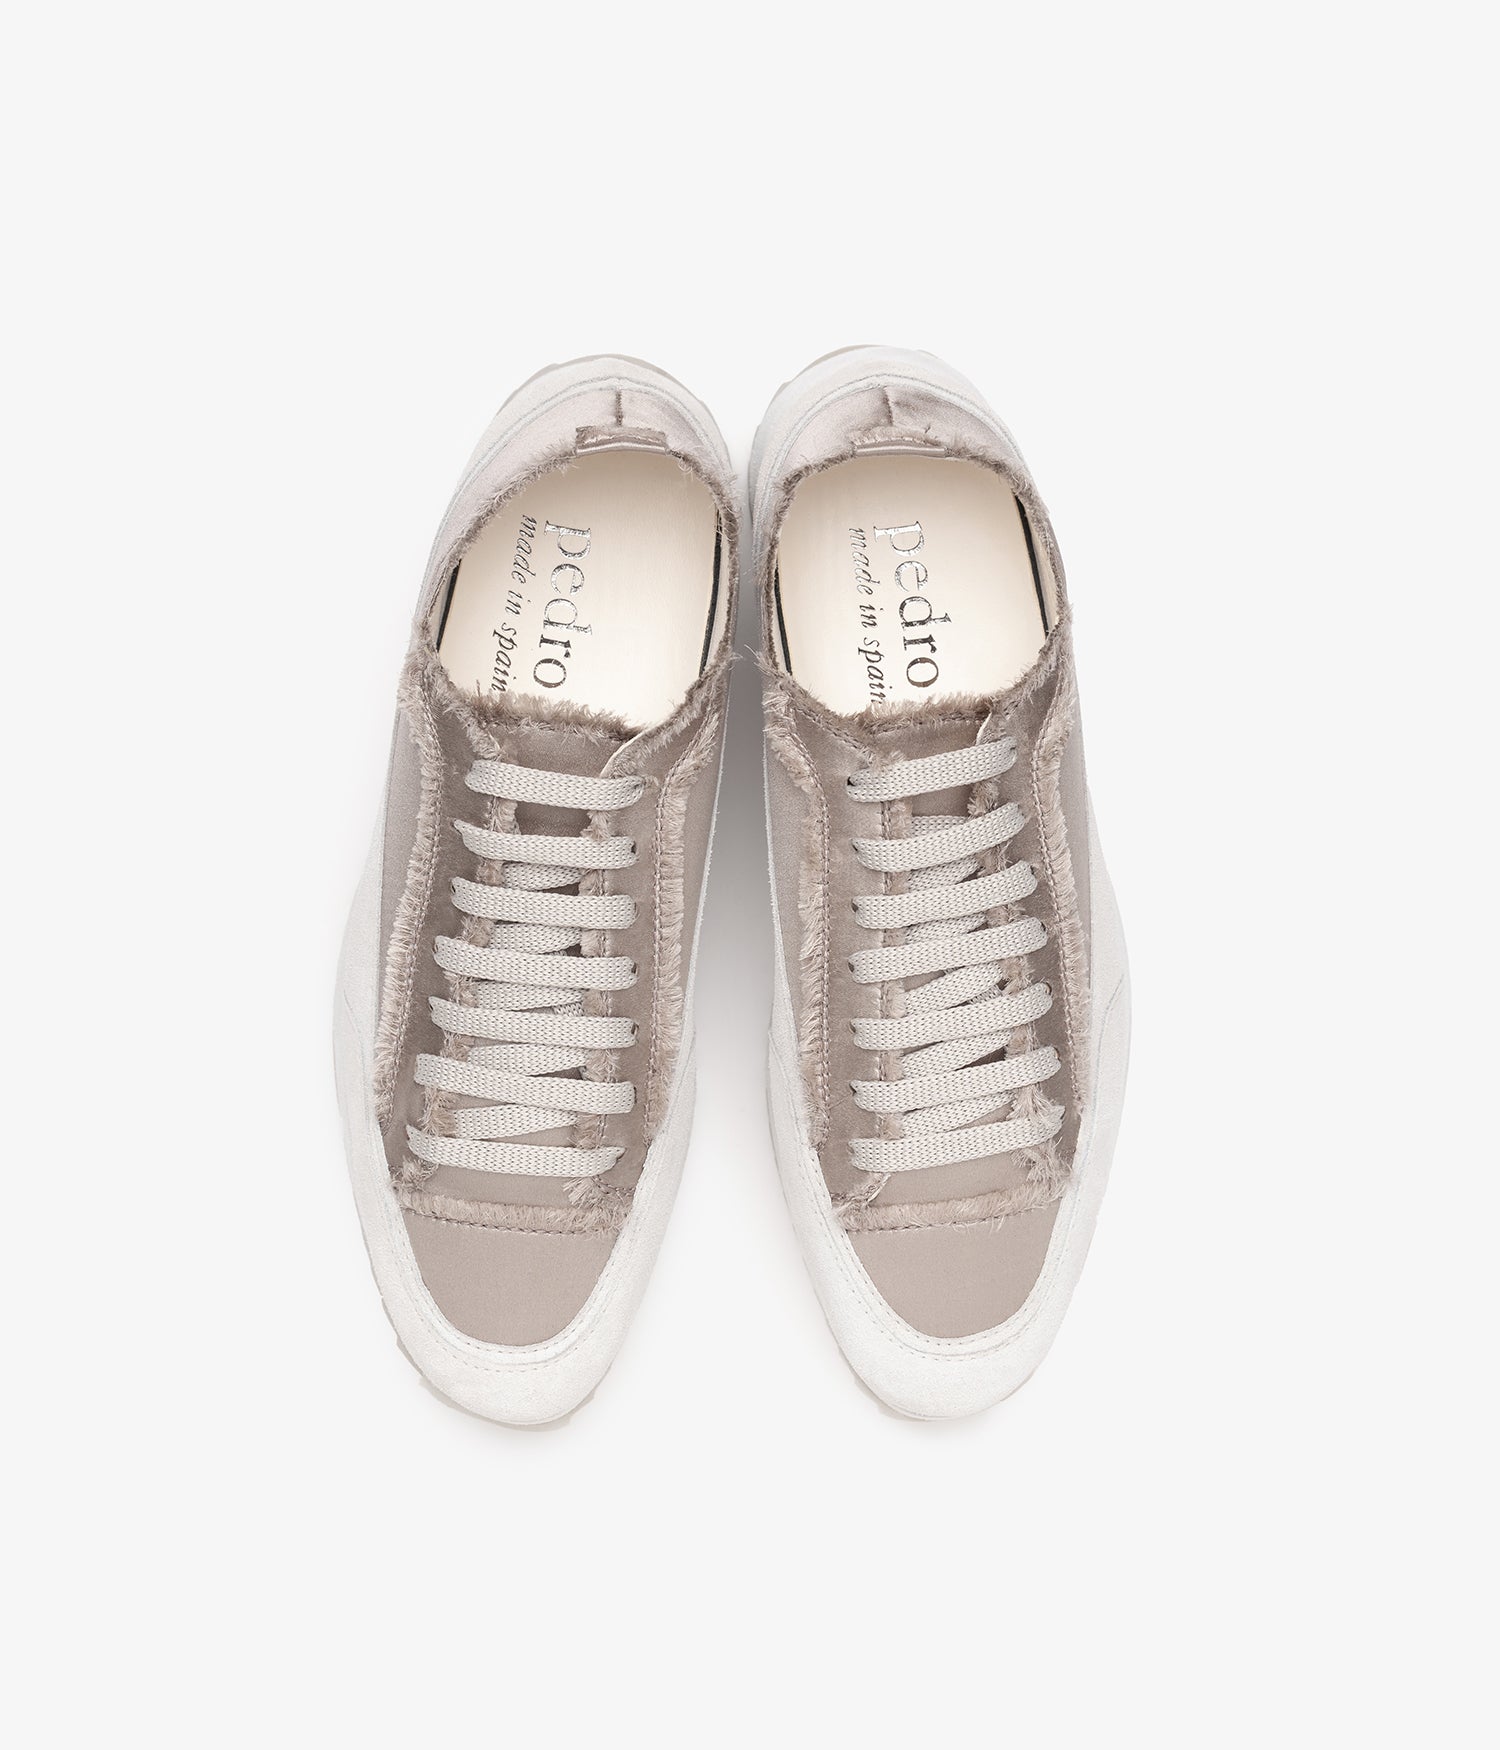 Flatform sneaker in grey satin | Orella | Essentials collection | PEDRO ...